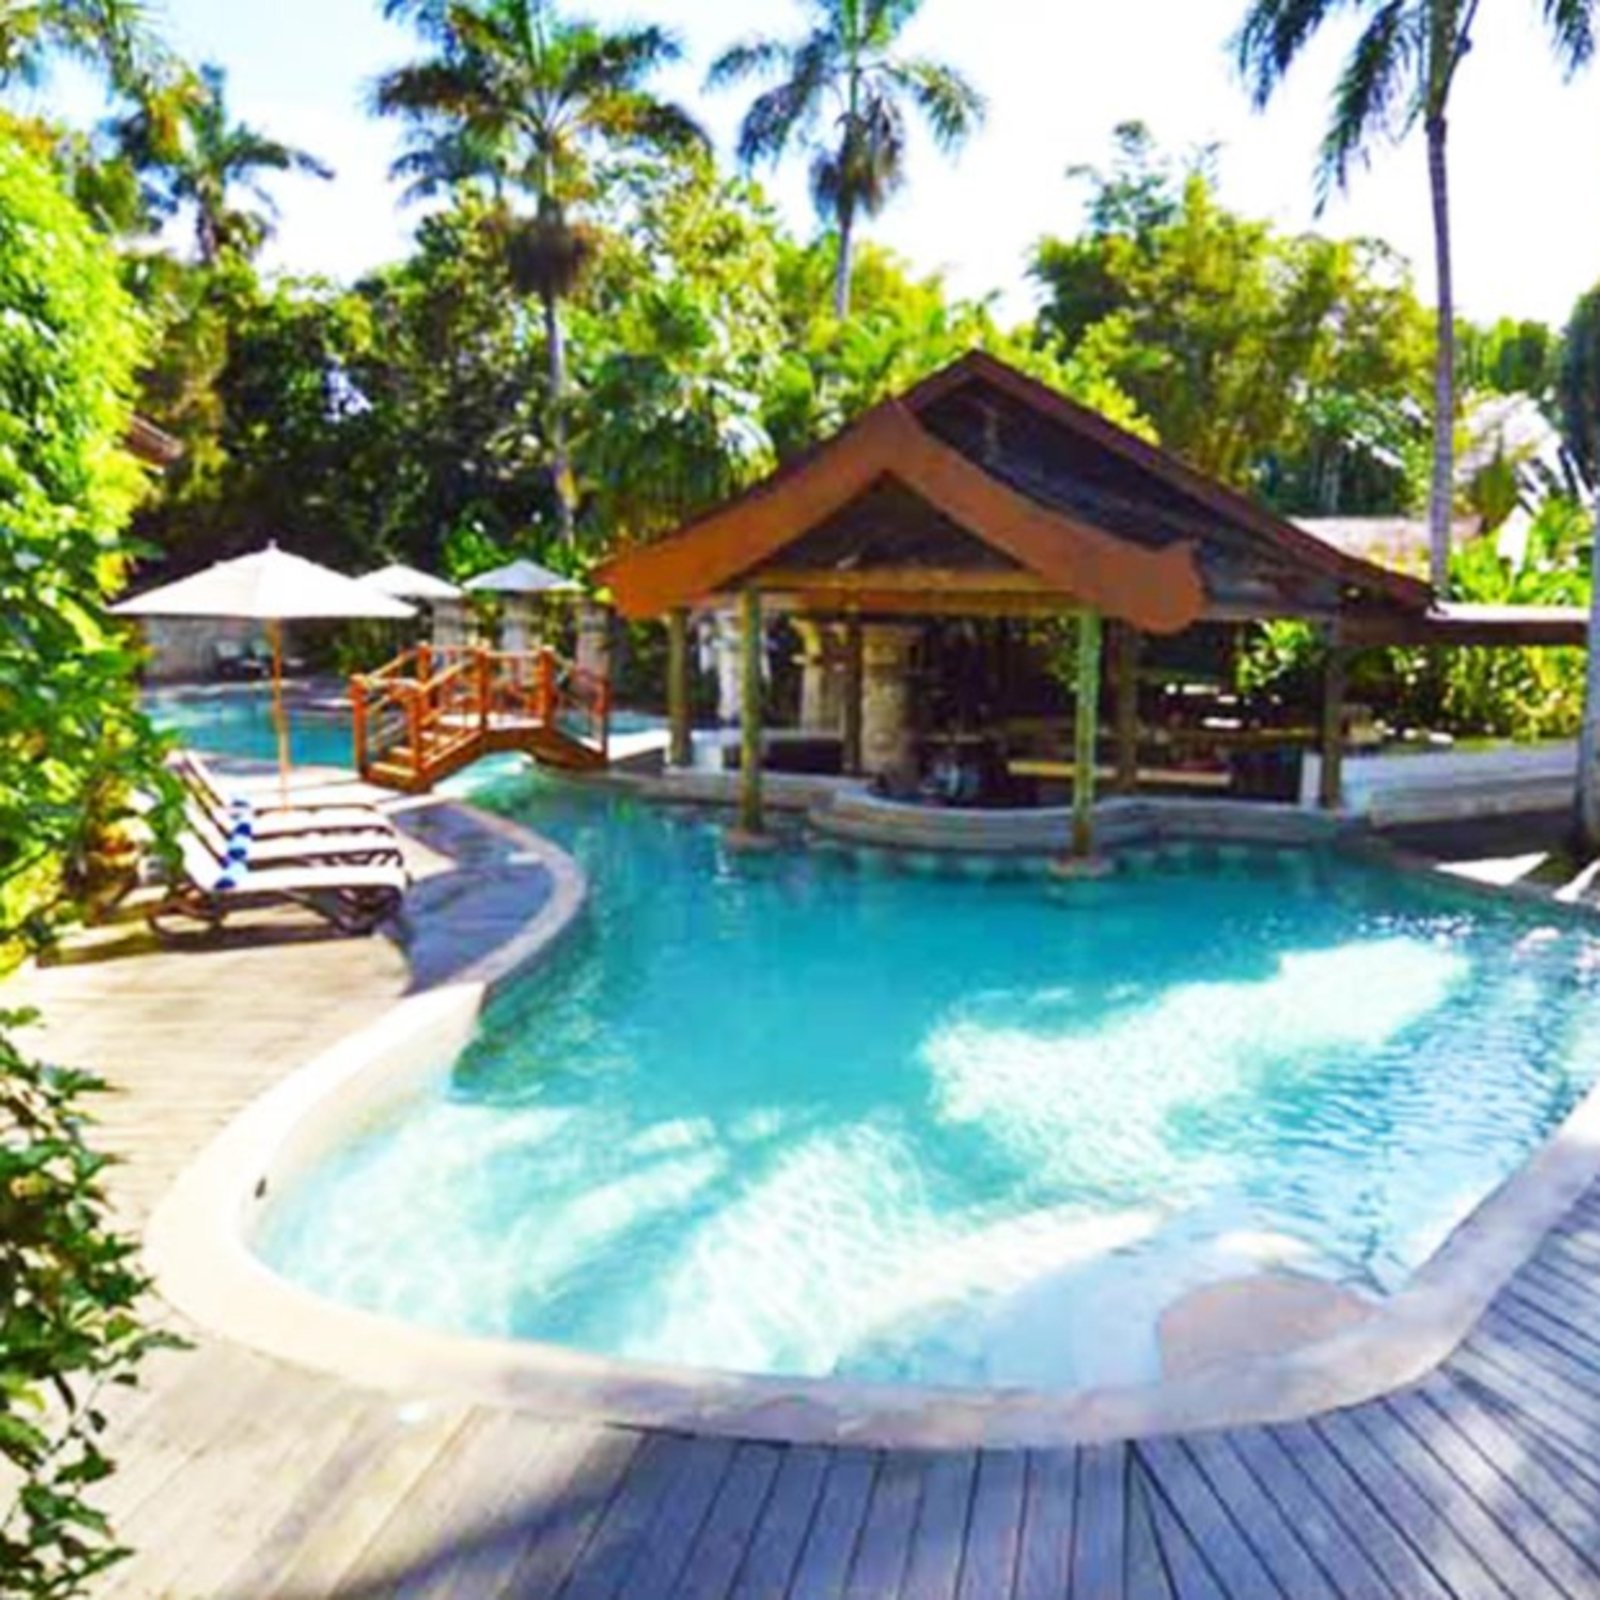 sunny hotel pool with swim-up bar